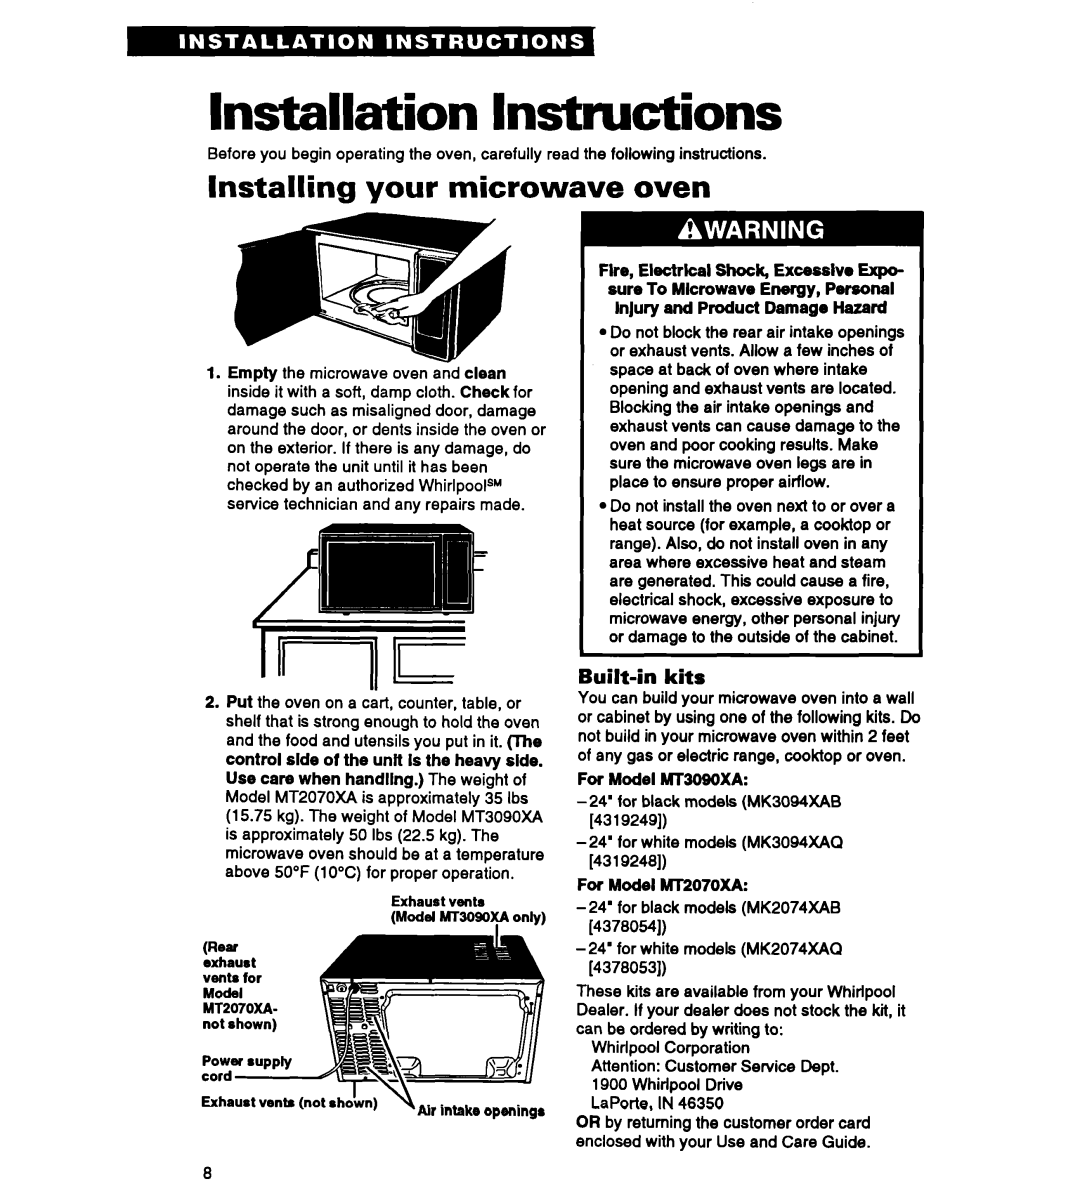 Whirlpool MT2070XAB, MT3090XAQ/B warranty installation Instructions, Installing your microwave oven, Built-inkits 